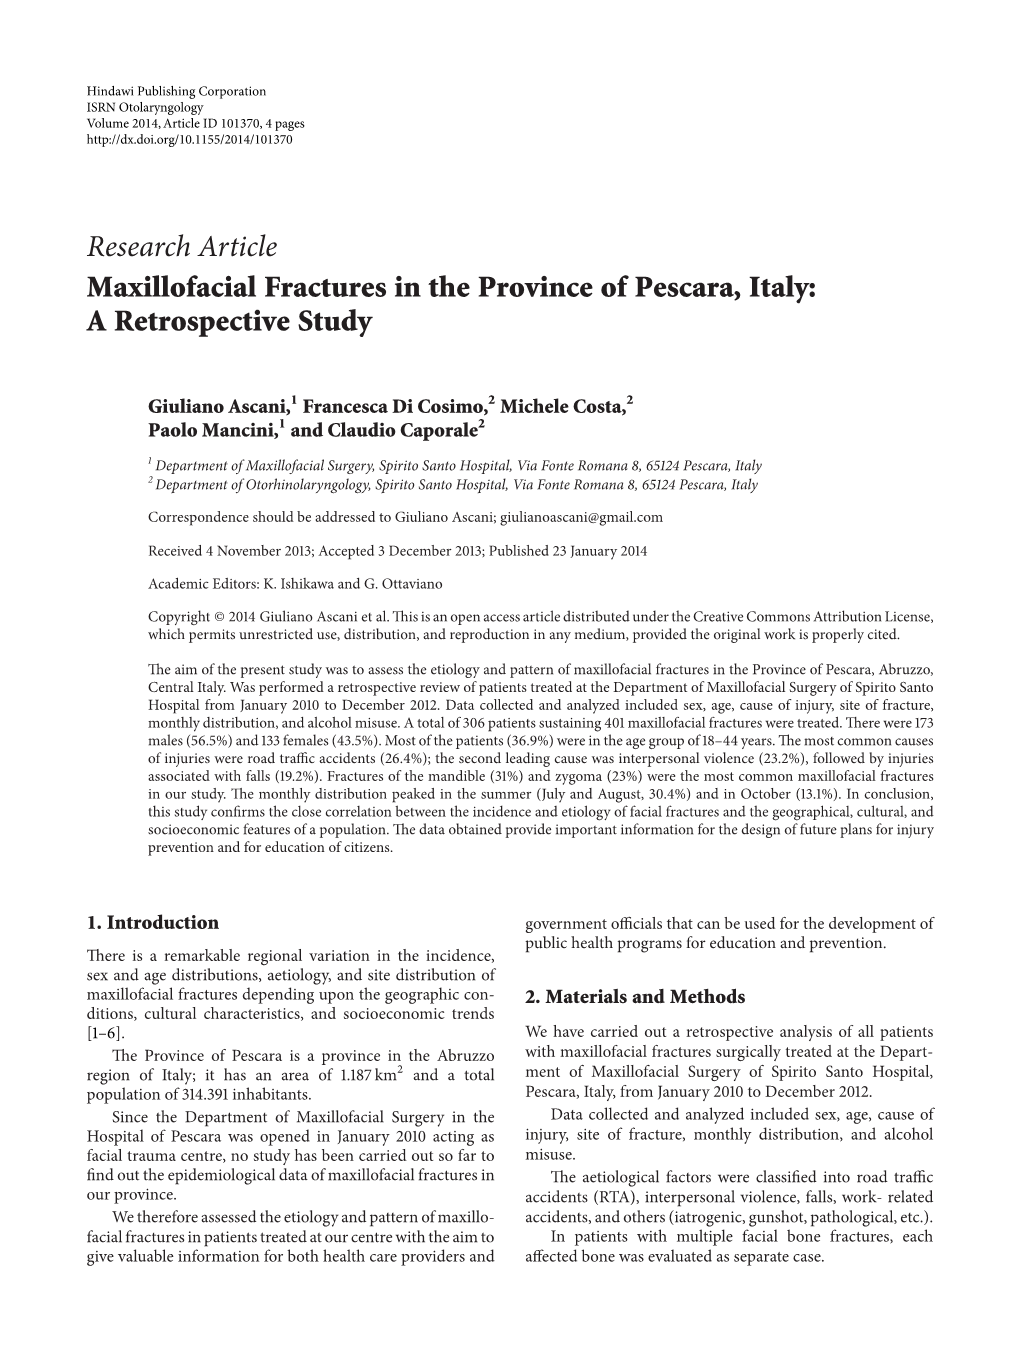 Maxillofacial Fractures in the Province of Pescara, Italy: a Retrospective Study